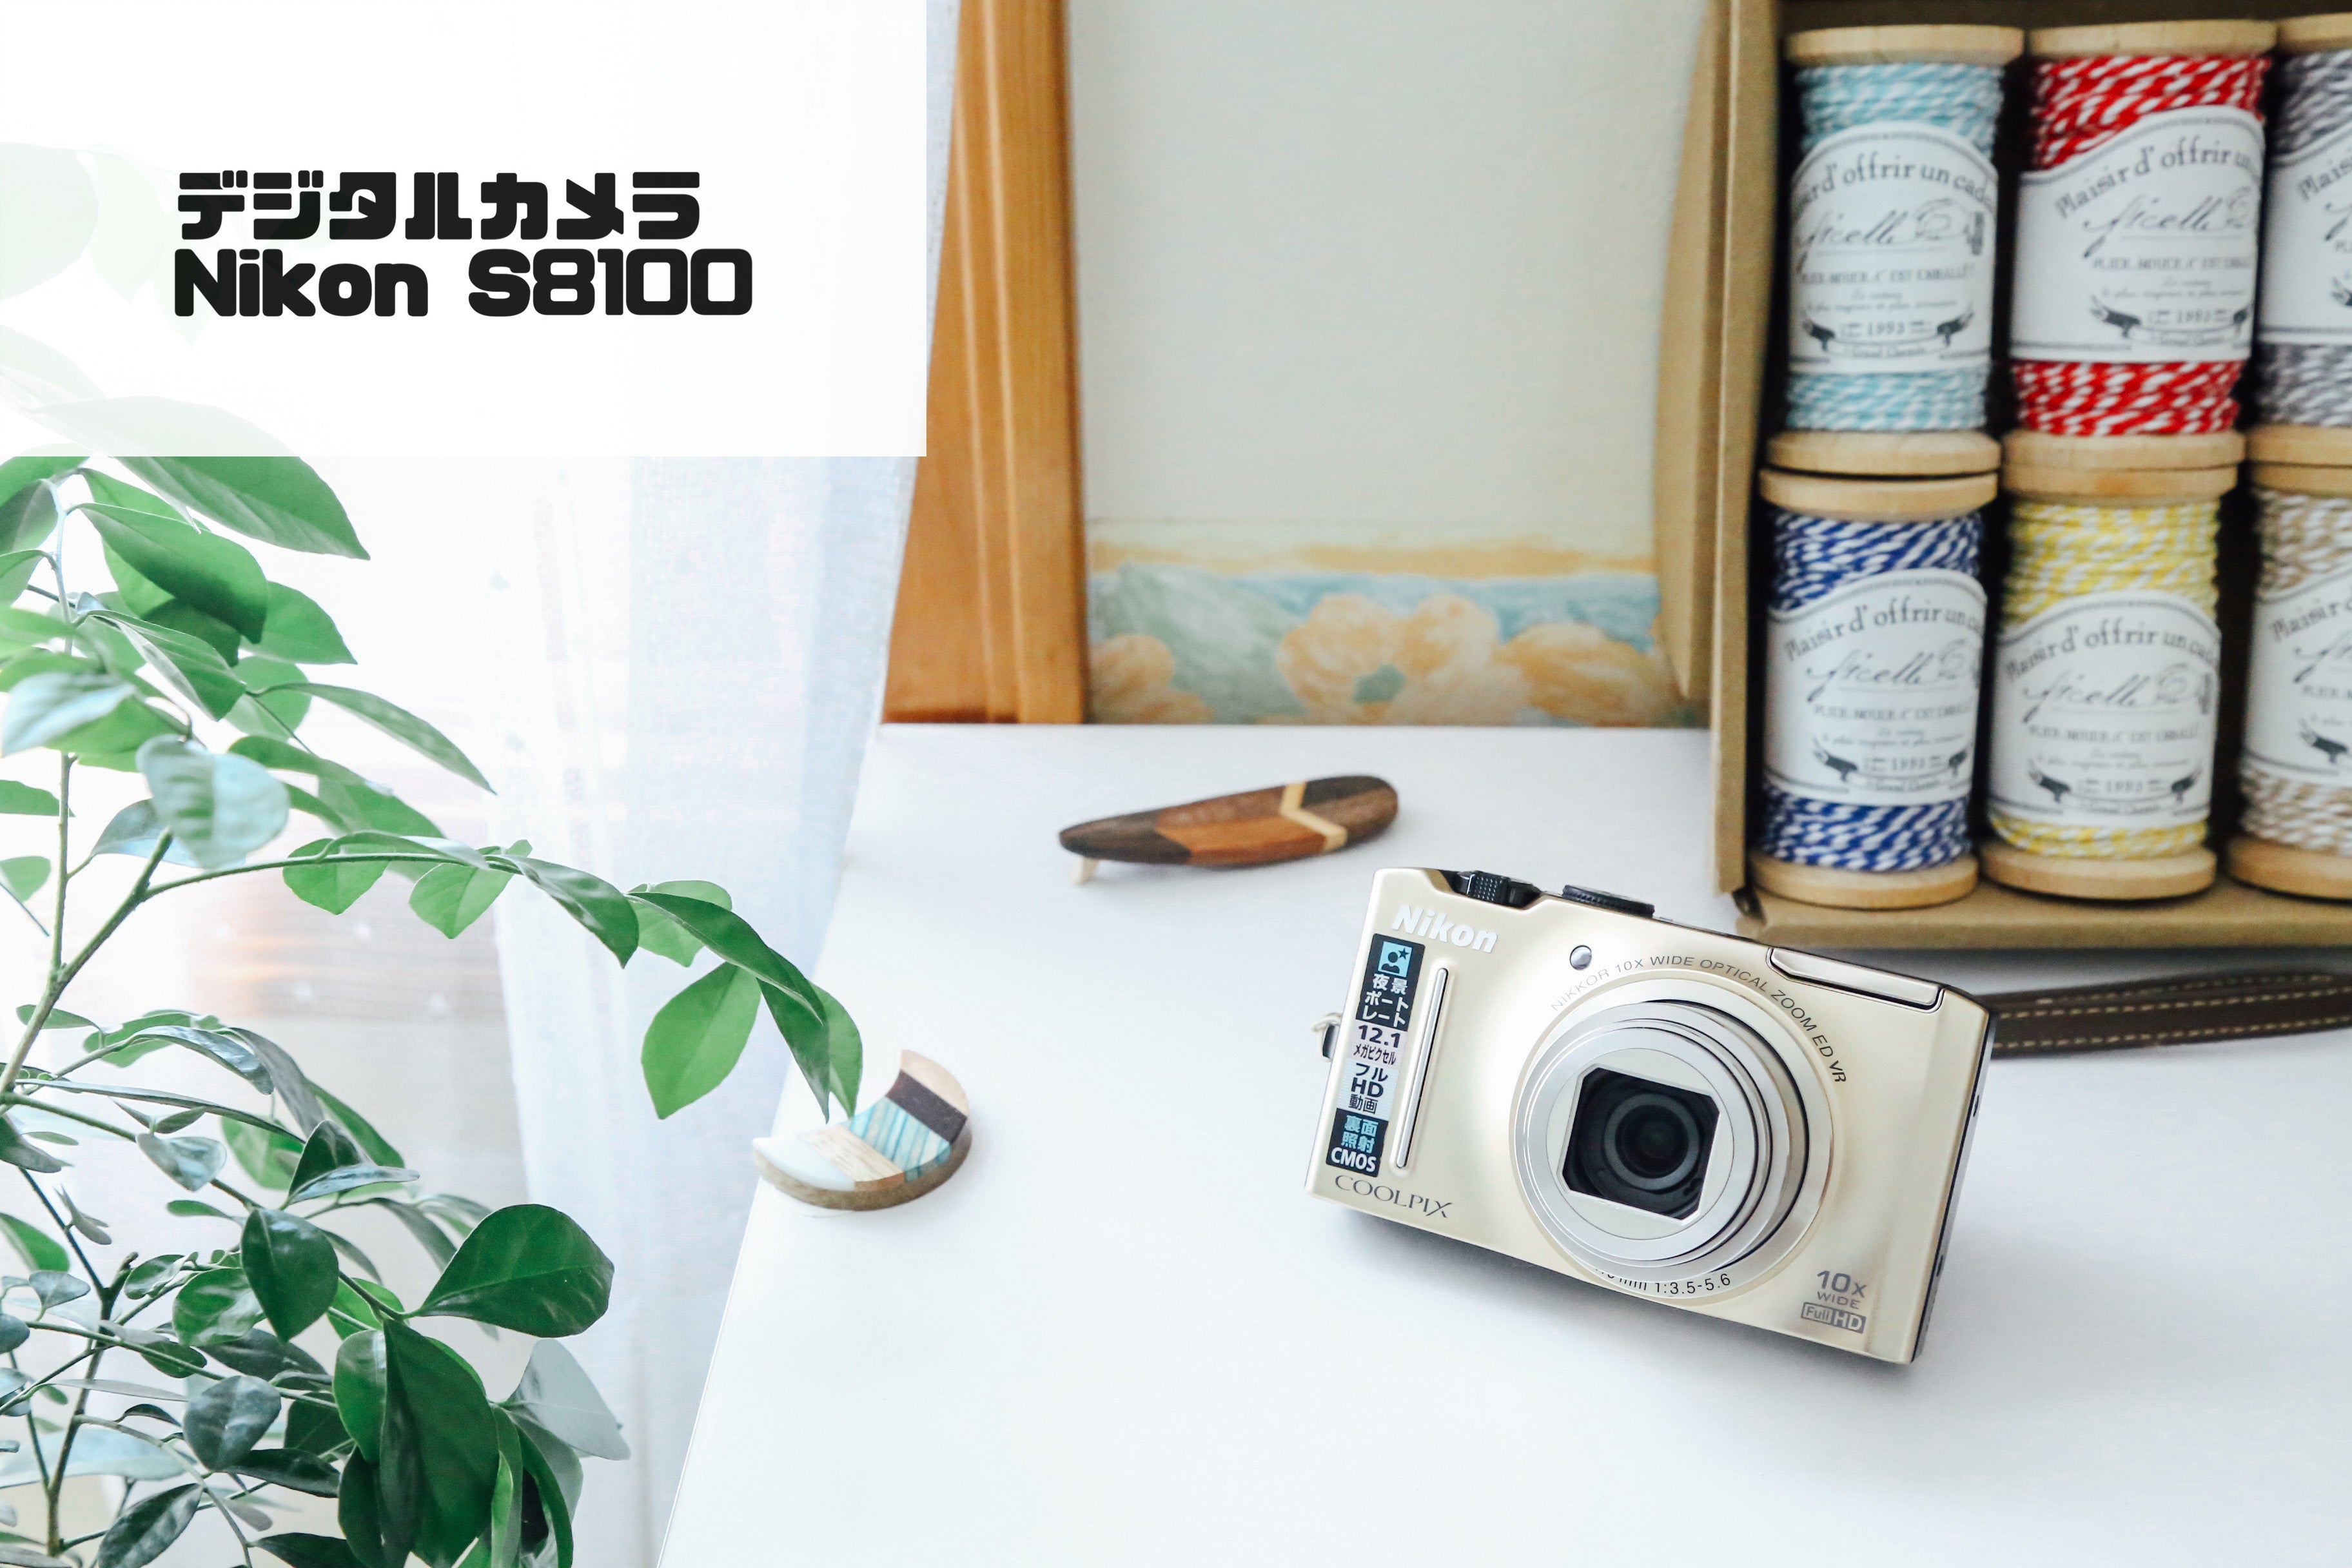 Nikon Coolpix S8100【完動品】【実写済み❗️】状態◎▪️オールドコンデジ▪️デジタルカメラ